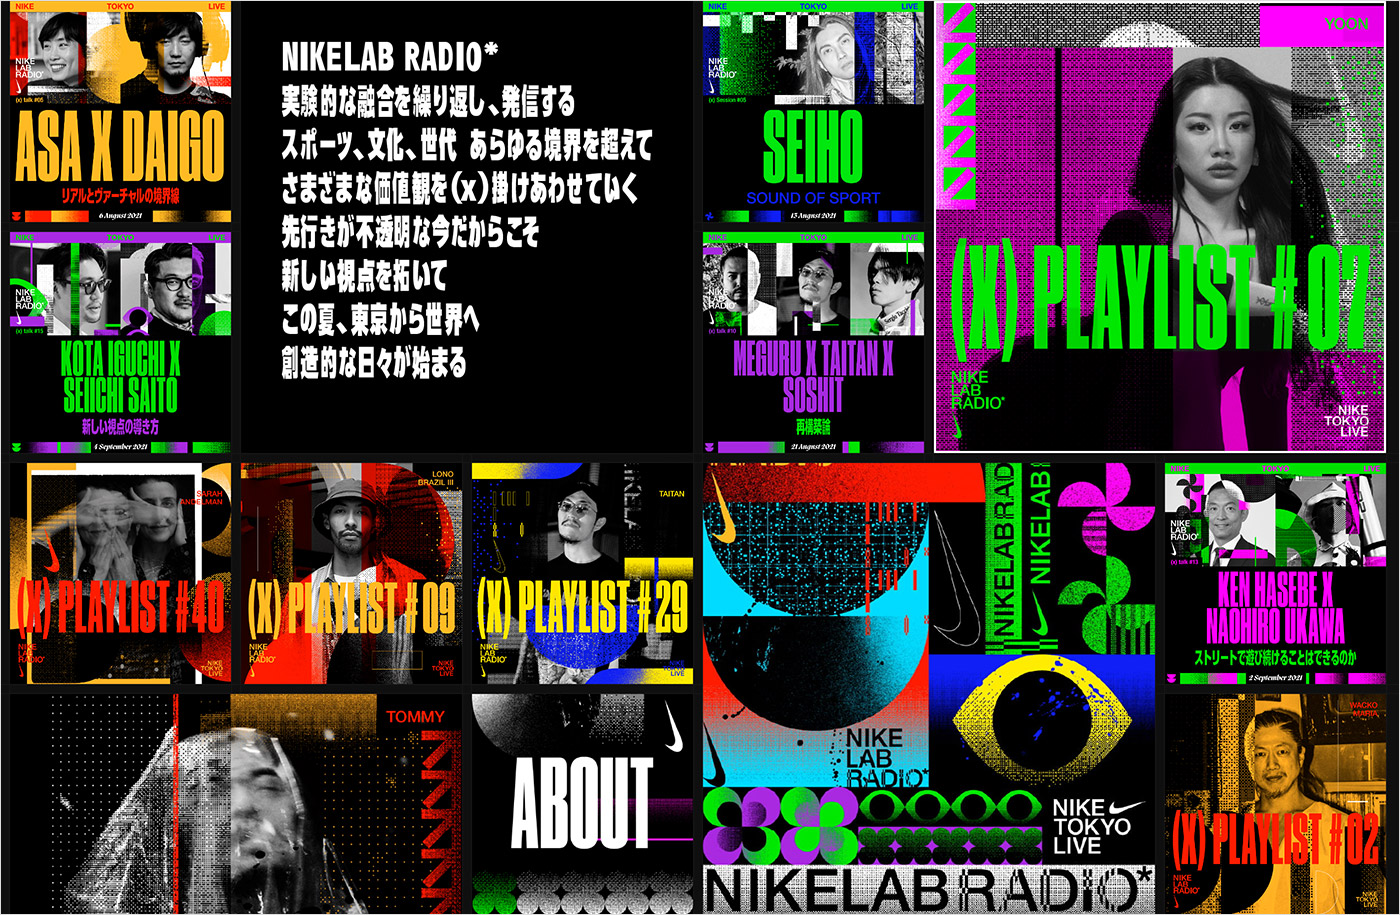 NIKE LAB RADIOウェブサイトの画面キャプチャ画像